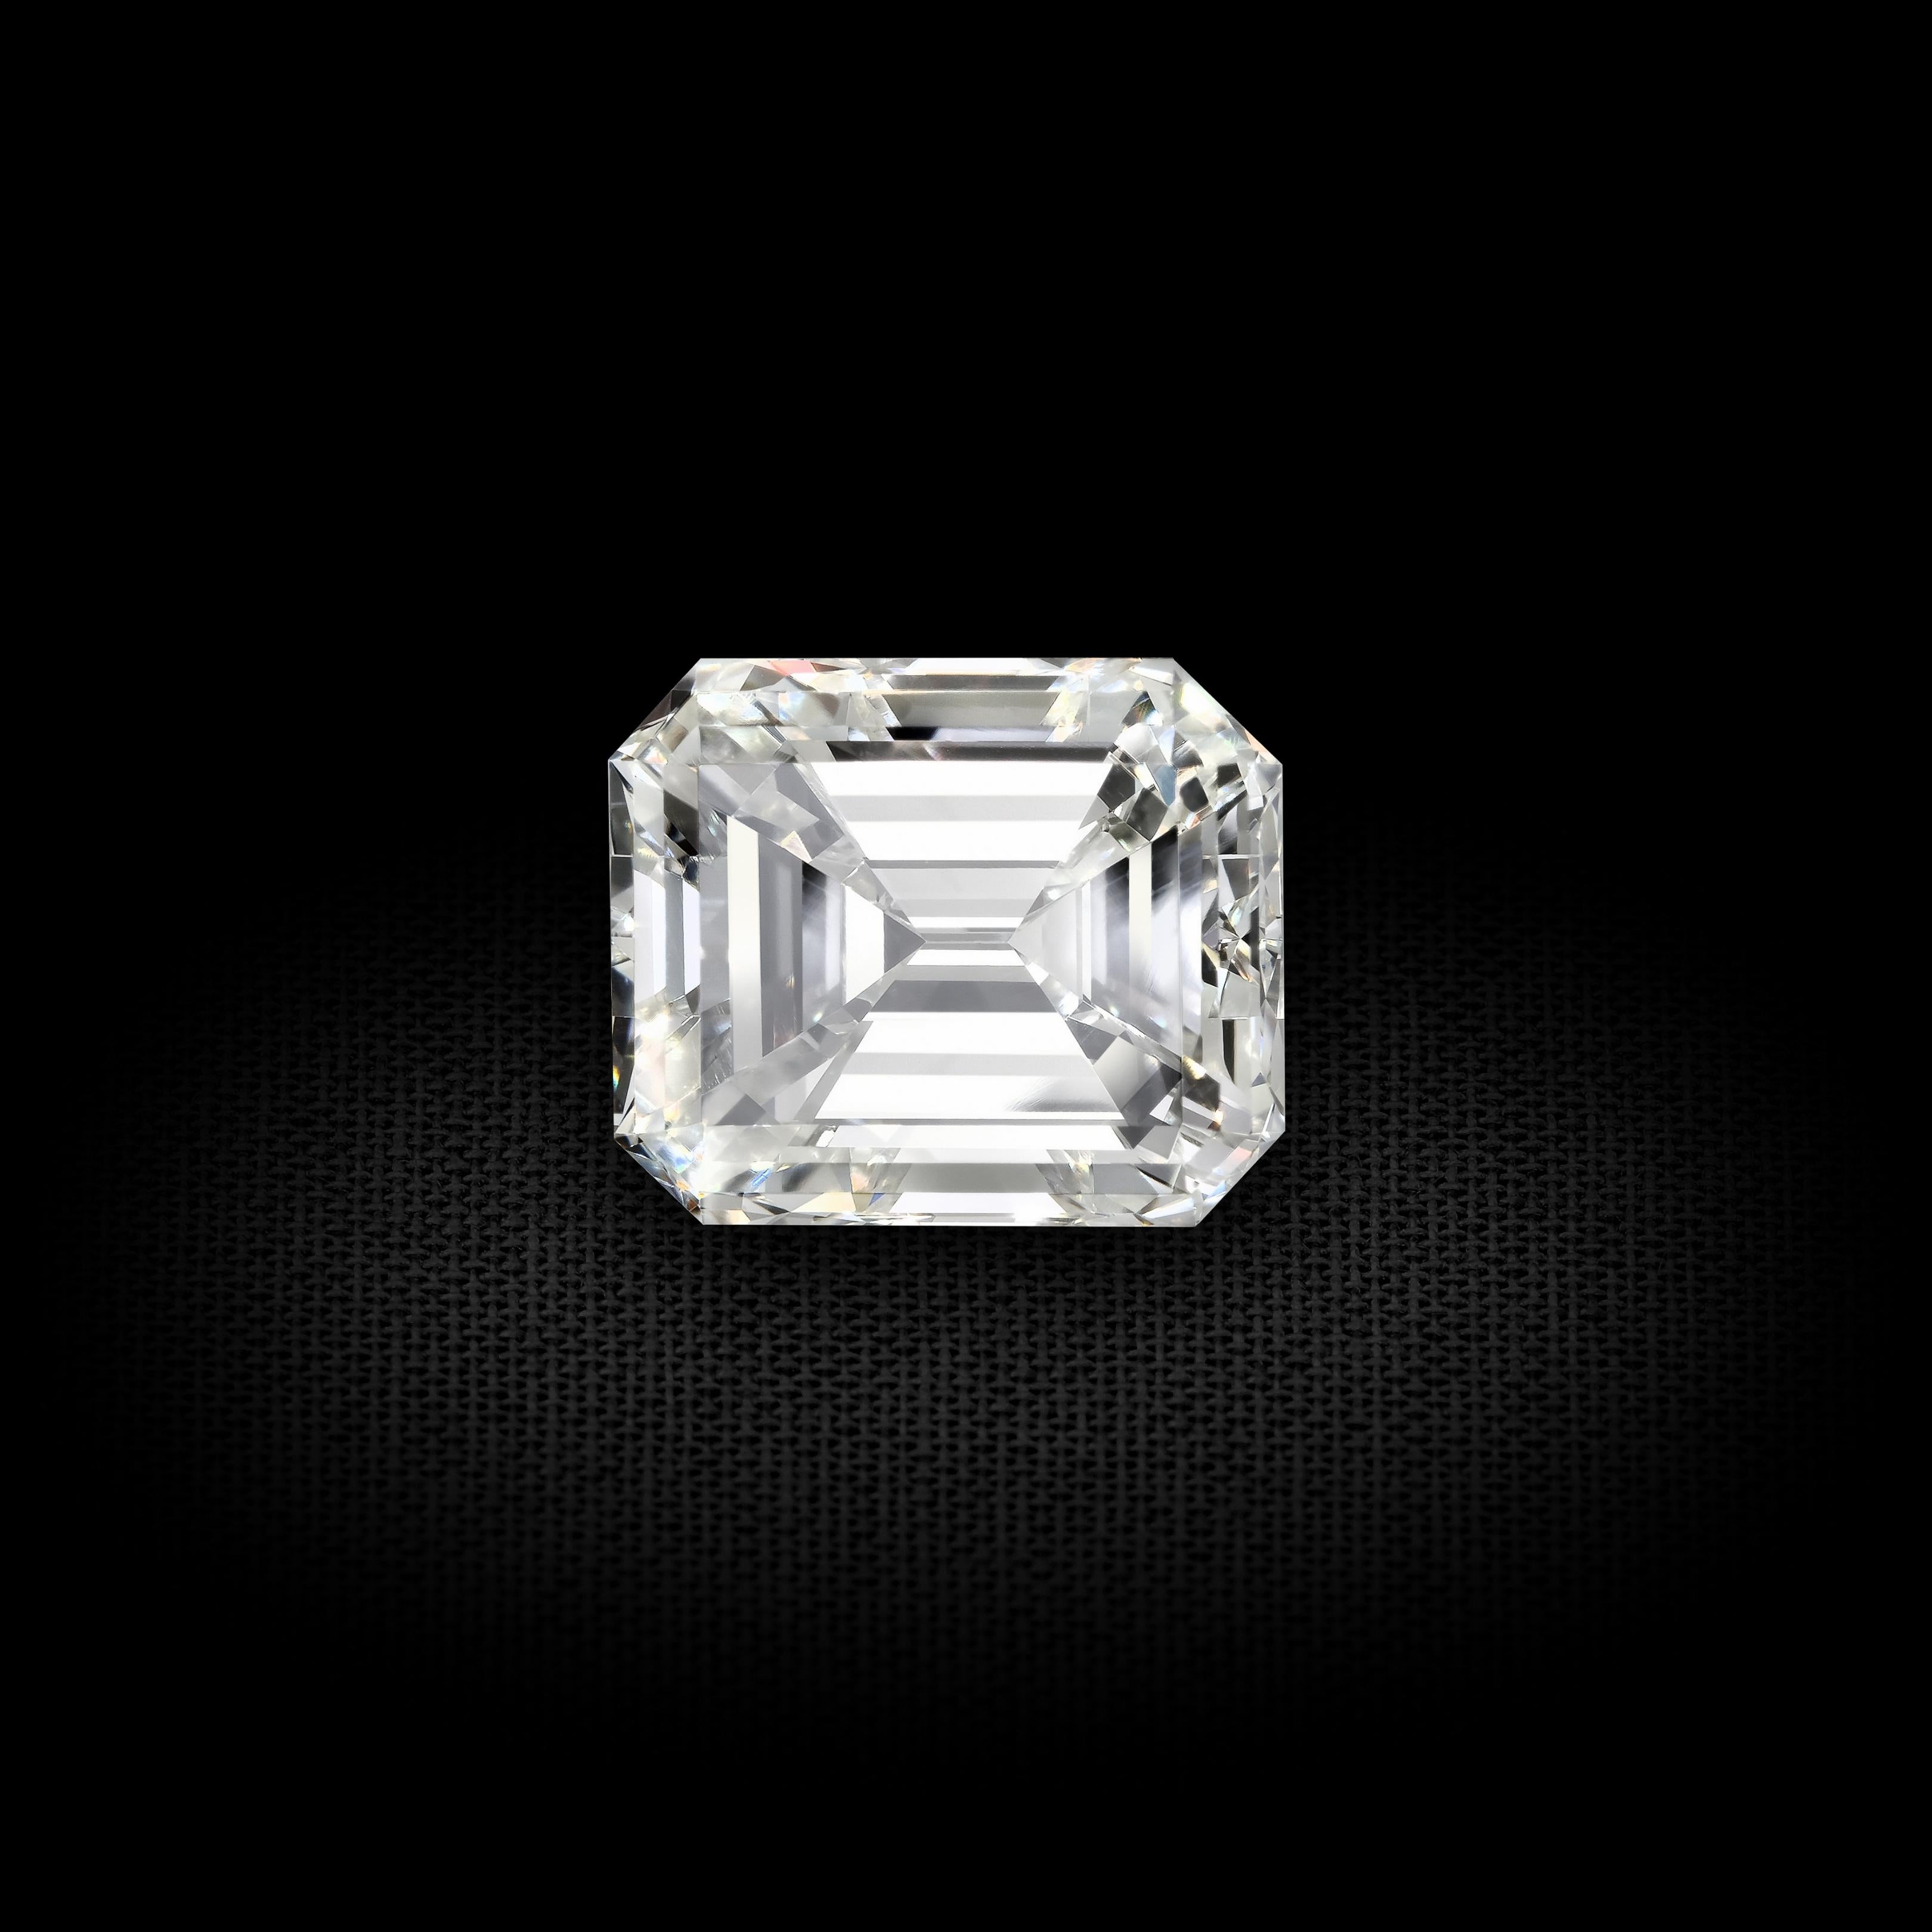 Emerald Cut GIA Certified 3.01 Carat G VVS2 Diamond Ring For Sale